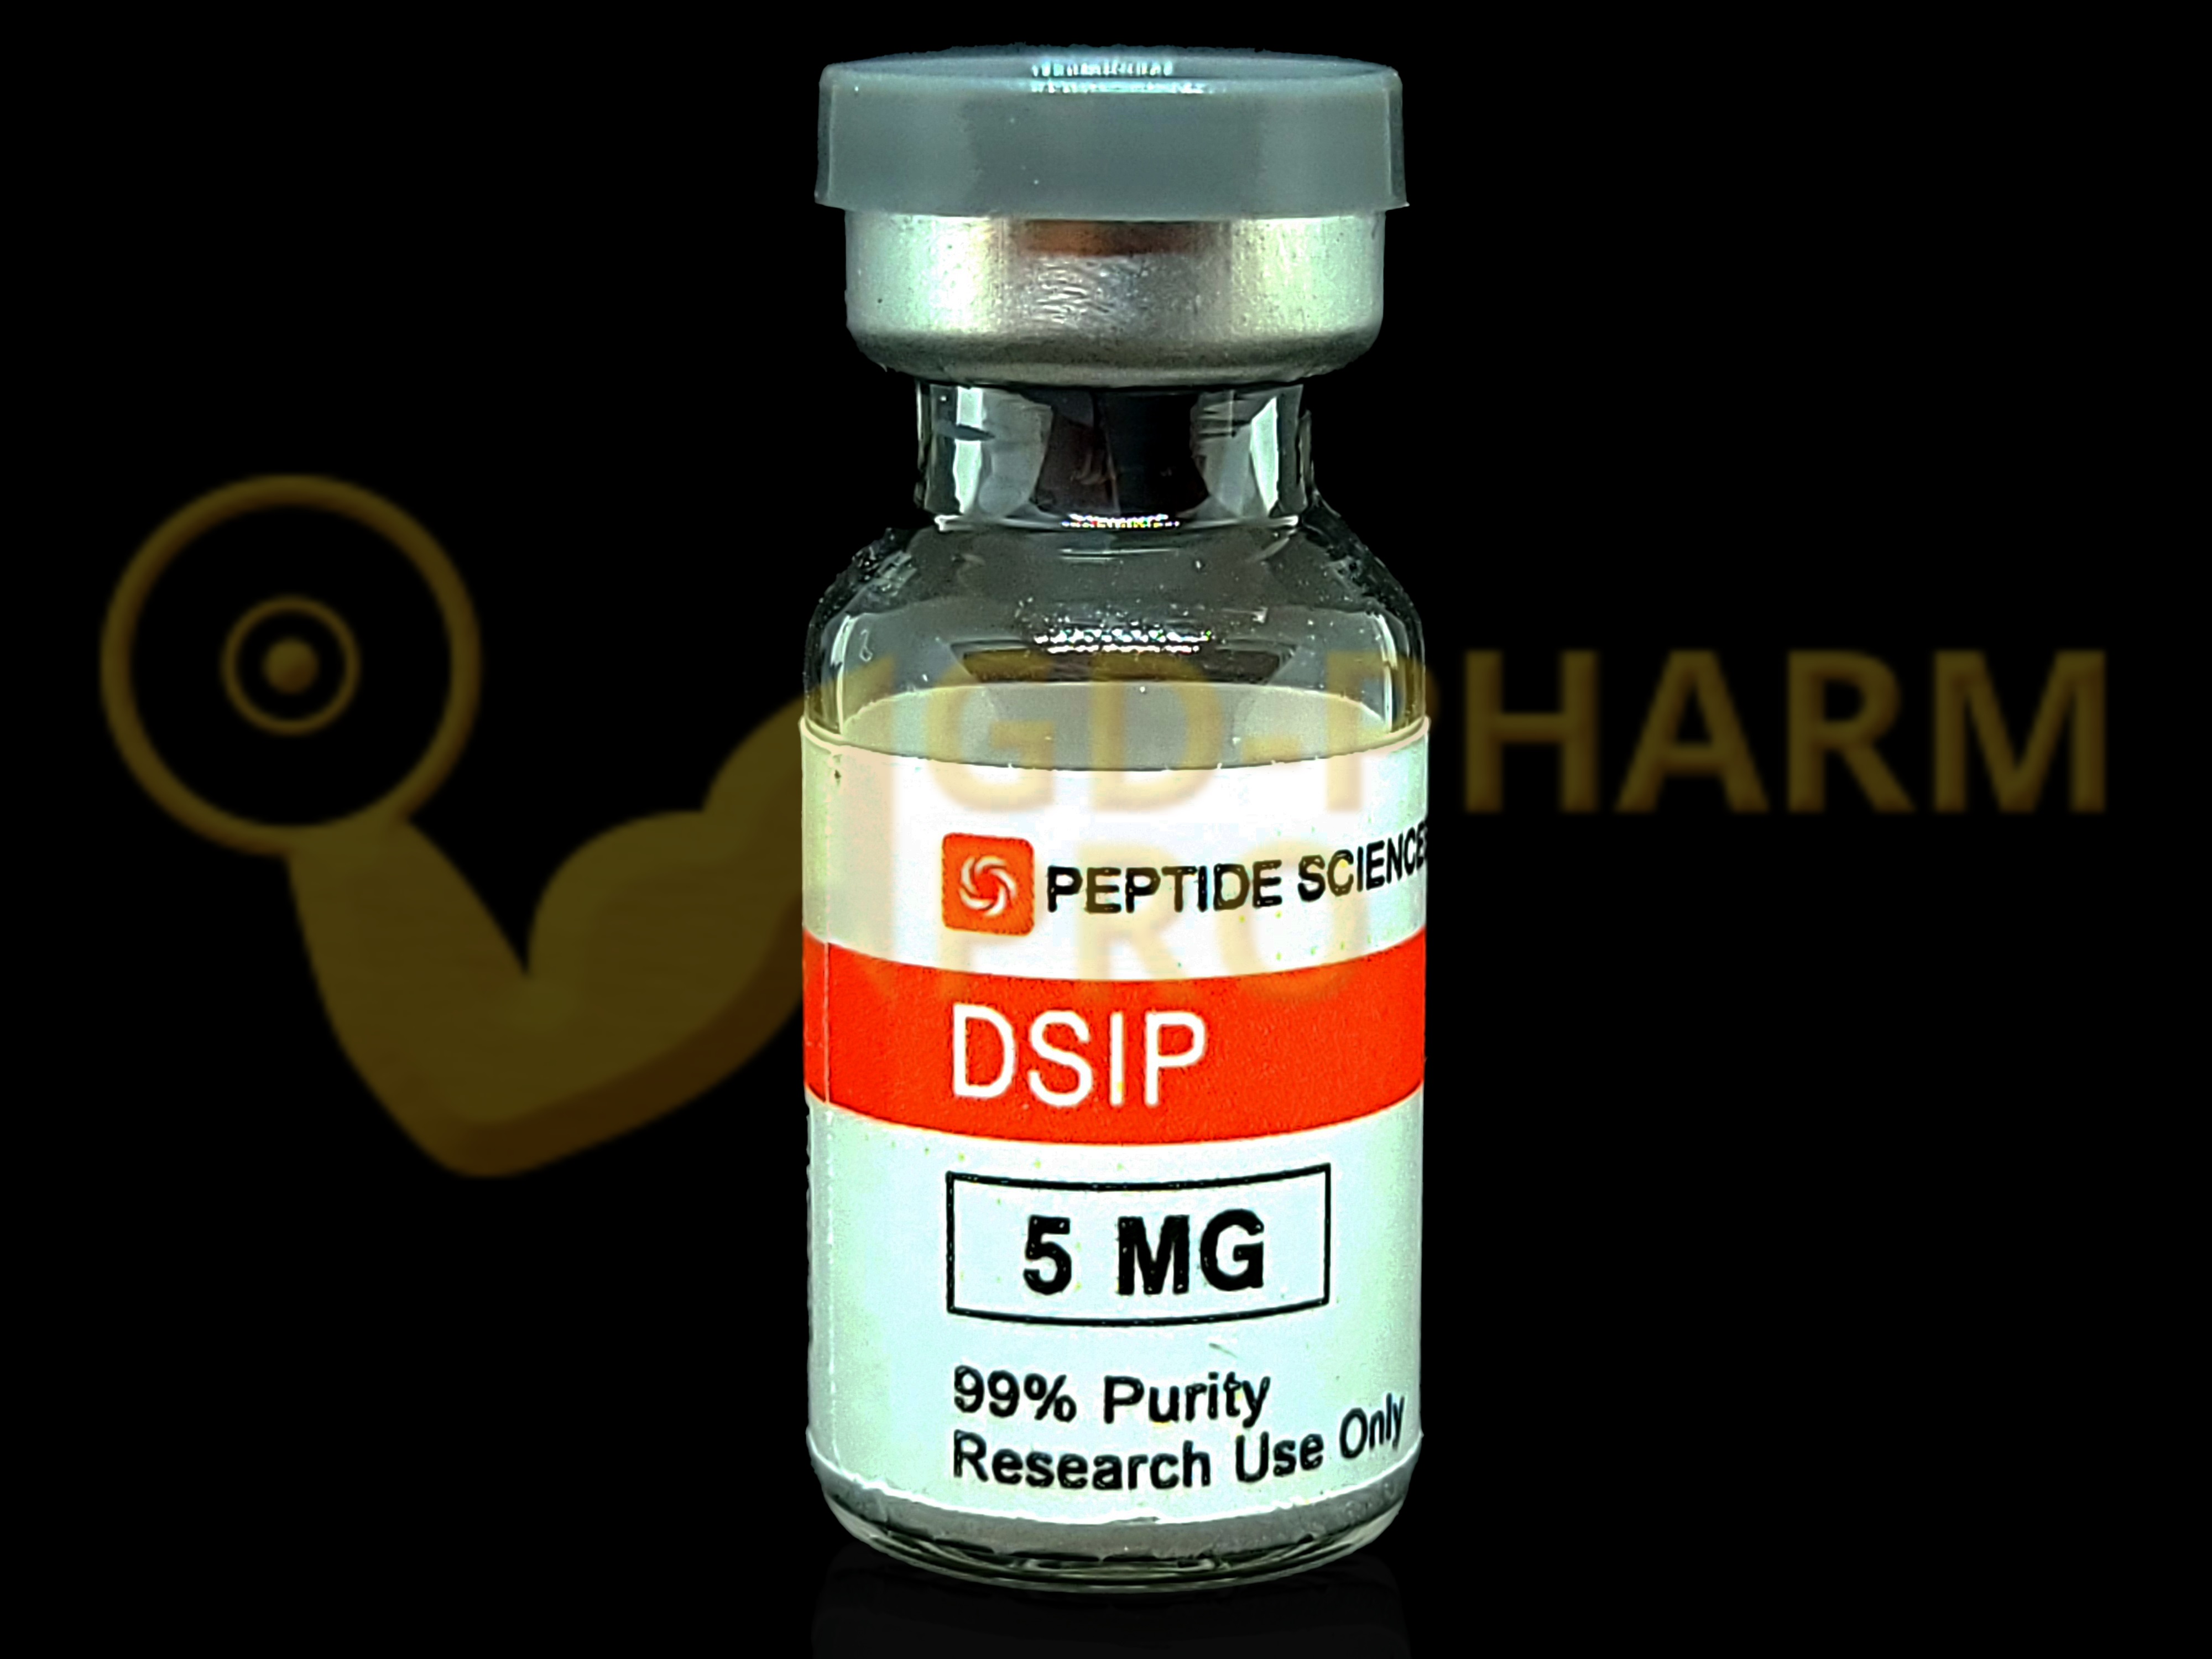 DSIP Peptide Sciences